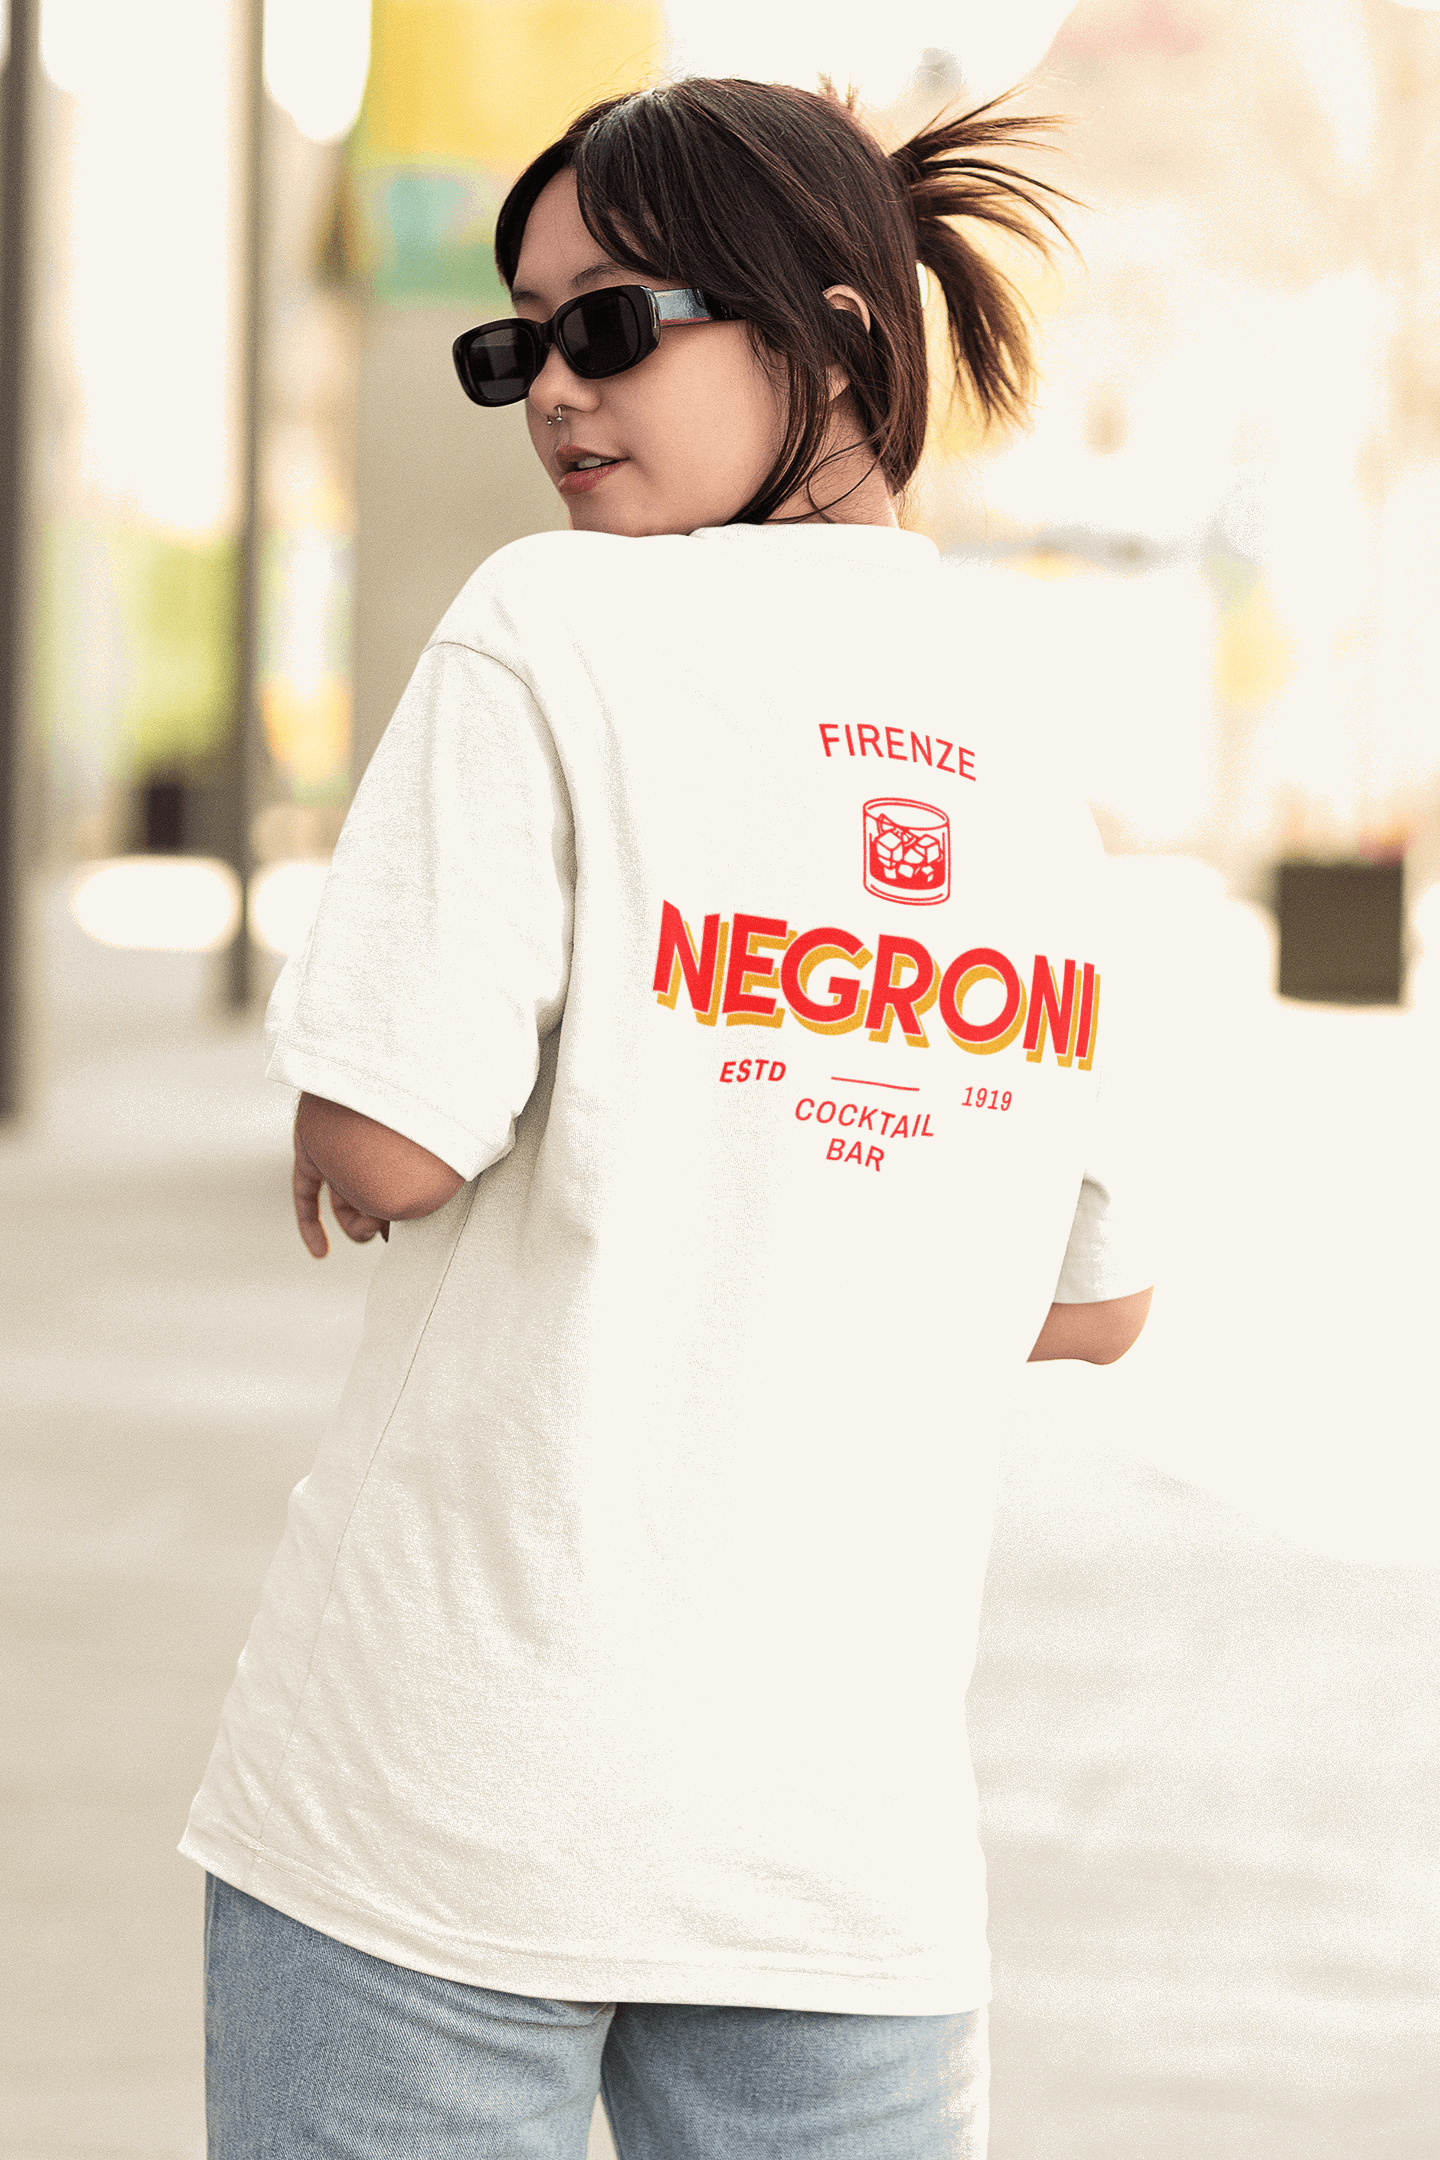 Negroni Cocktail Bar - Organic T-shirt - The Refined Spirit